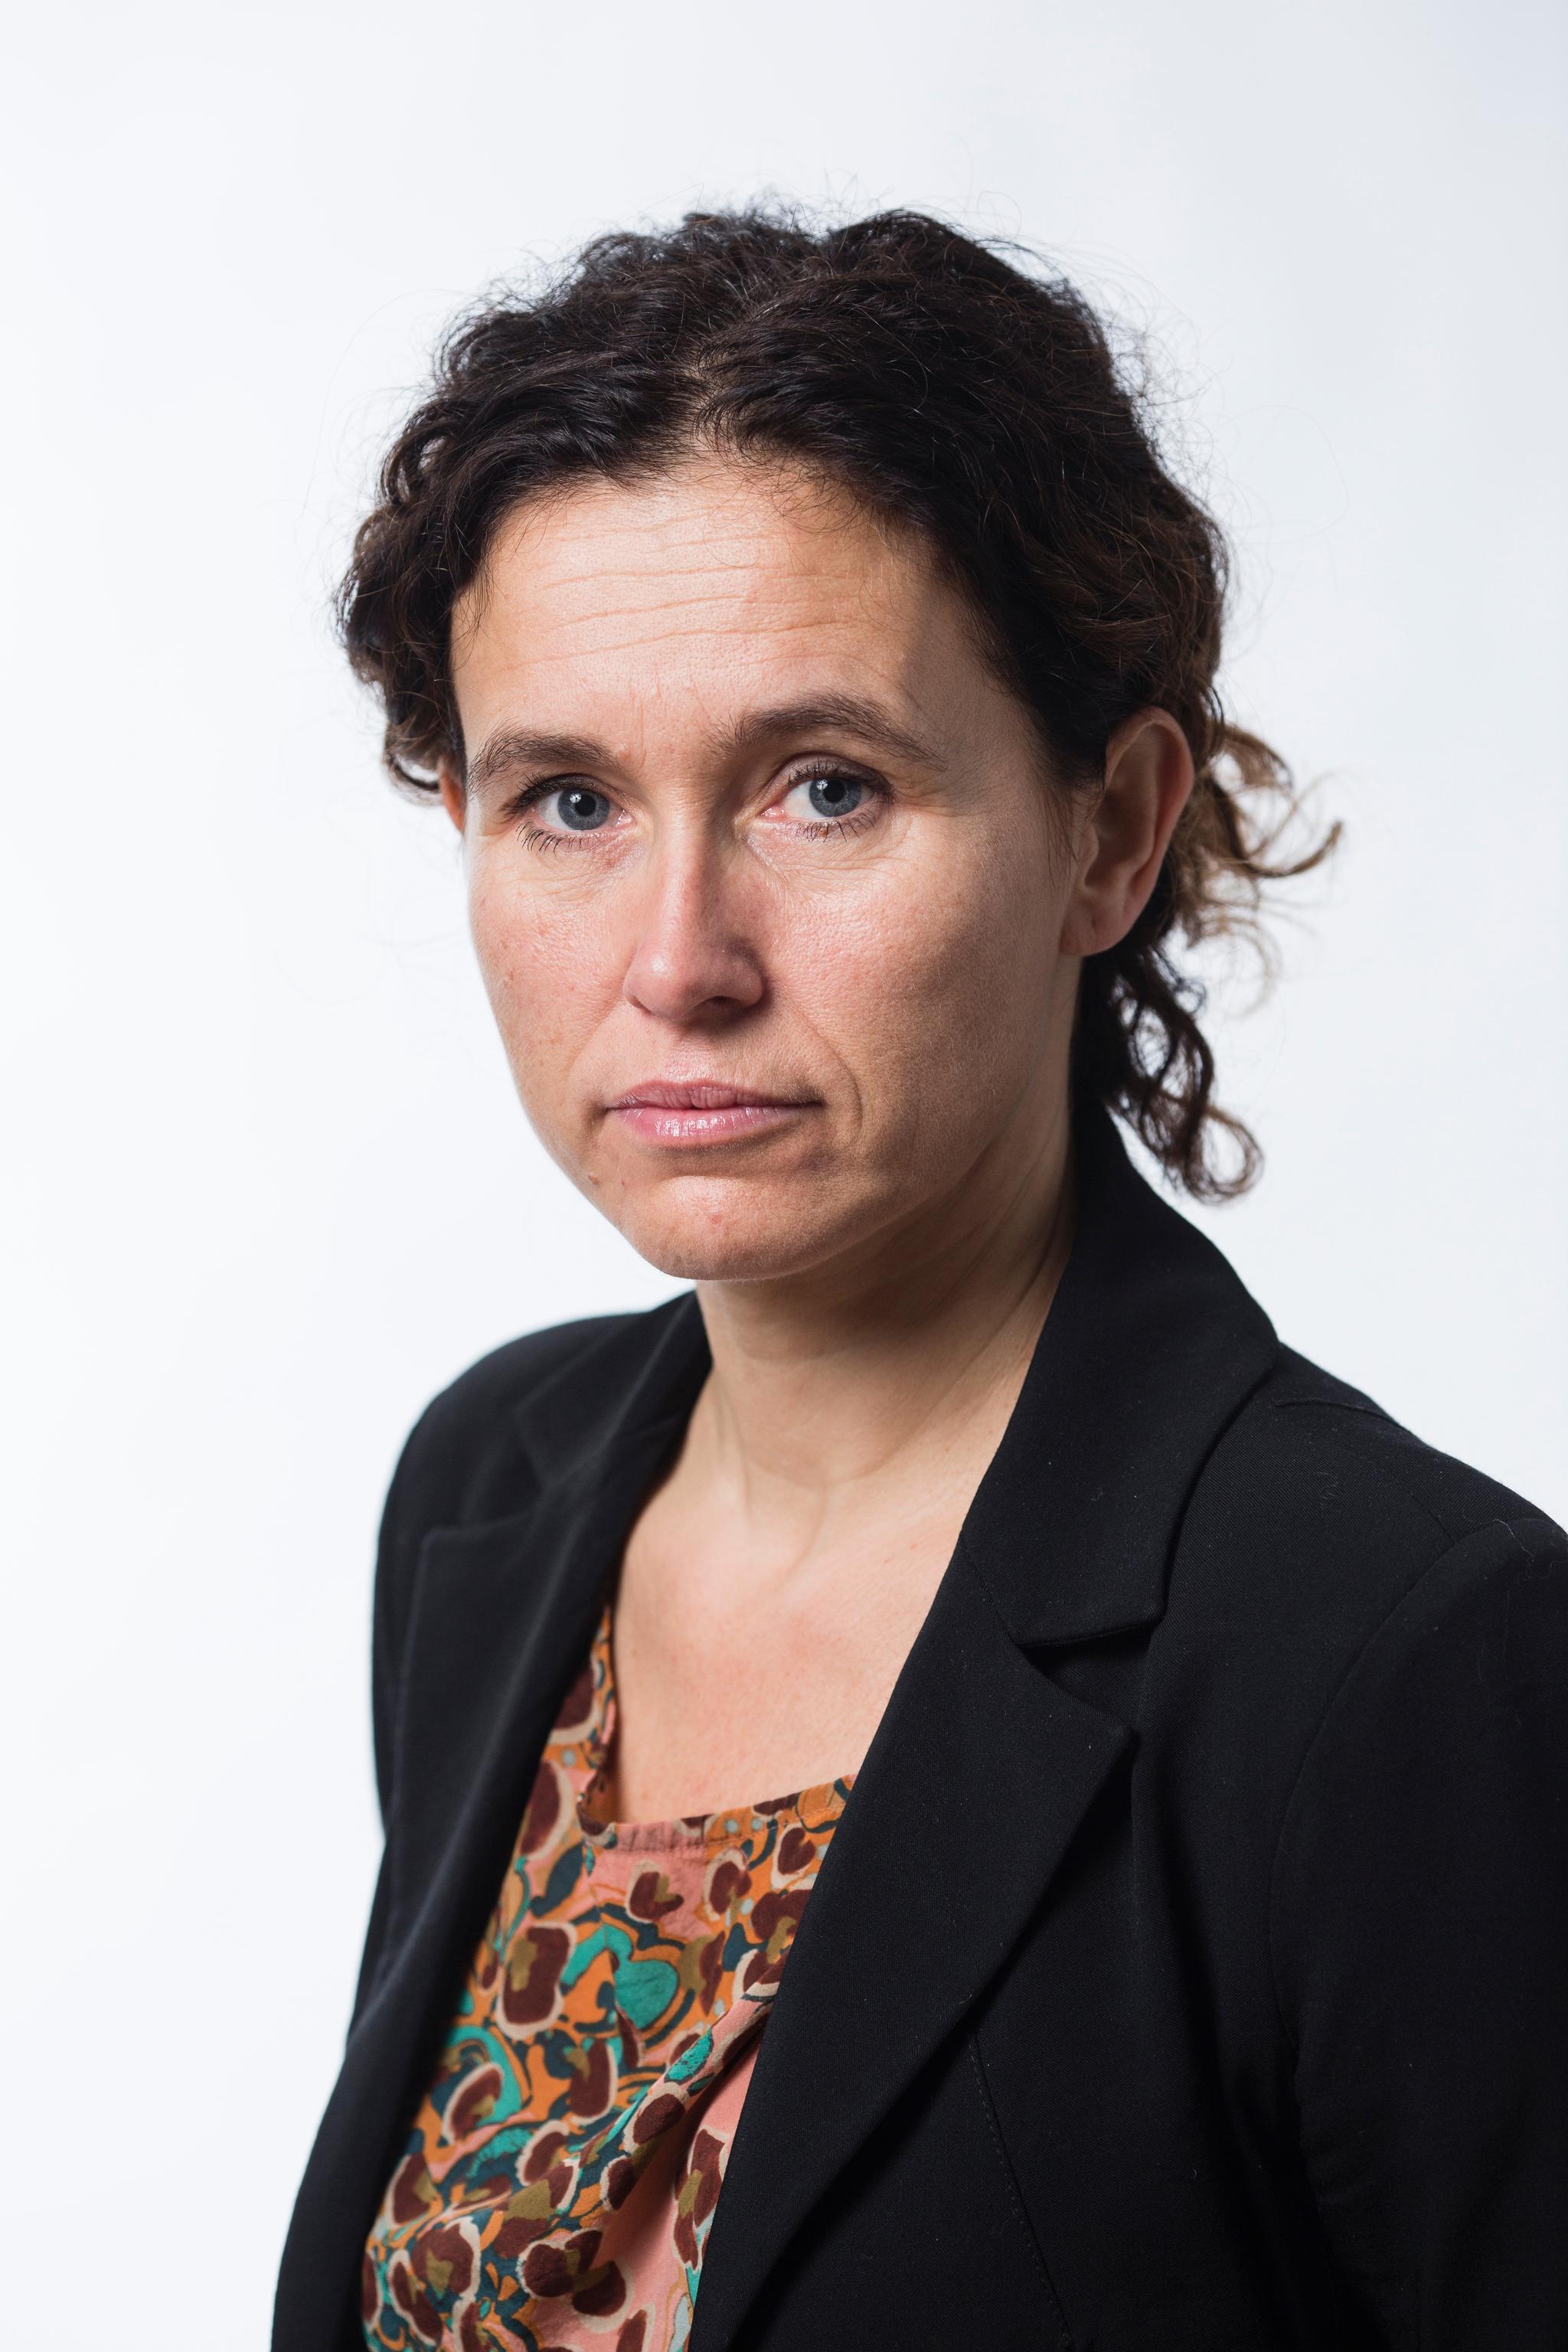  Seniorforsker Julie Wilhelmsen ved Norsk utenrikspolitisk institutt (NUPI).